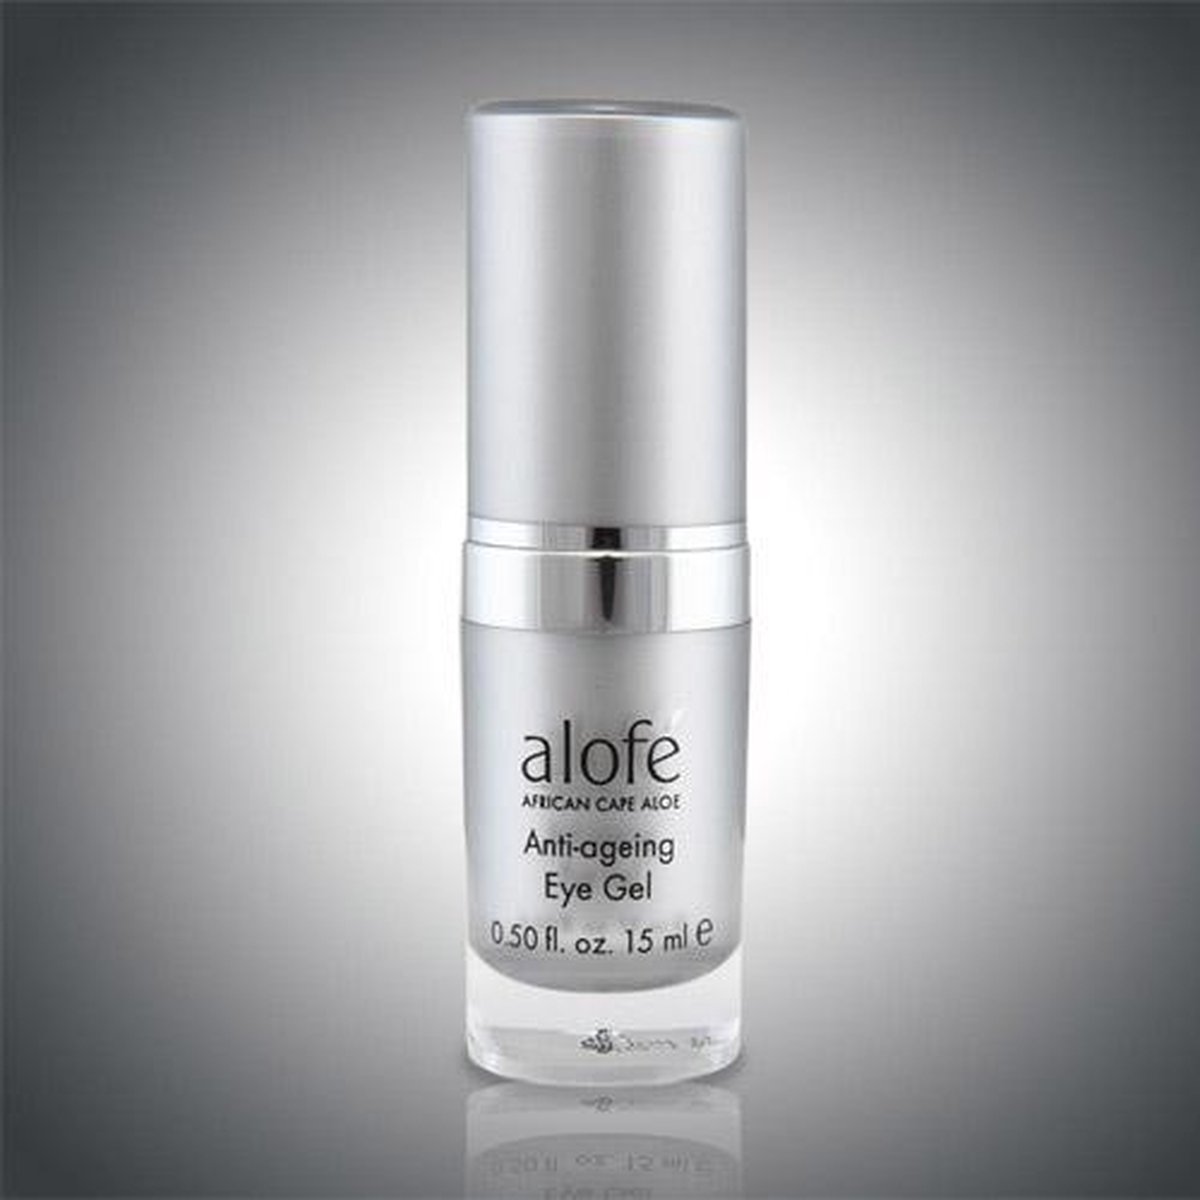 Alofe - Anti Ageing Eye Gel, 15 ml